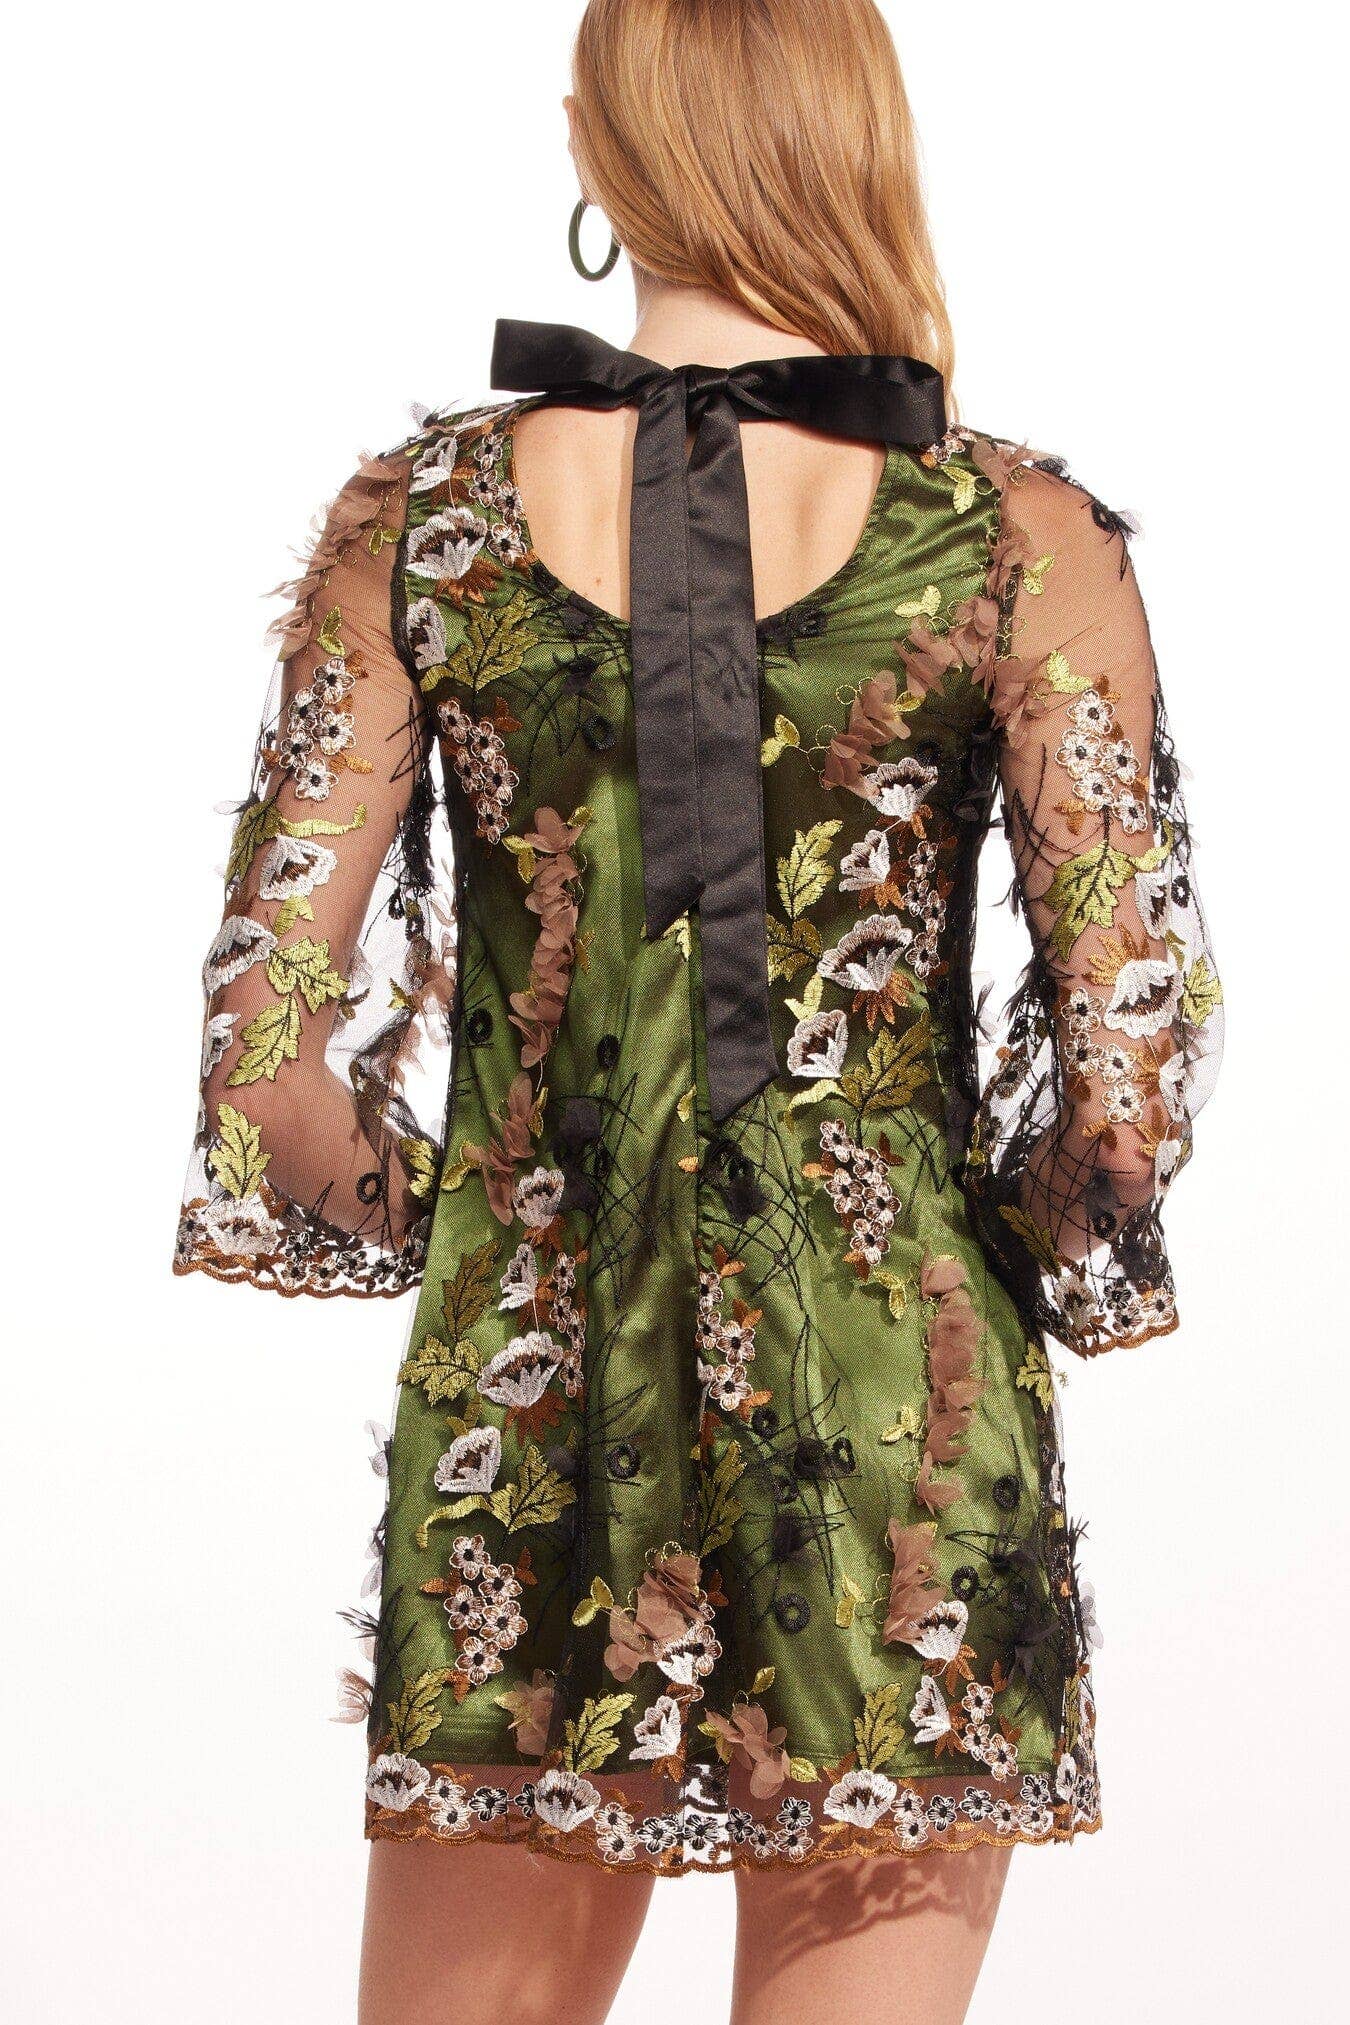 Eva Franco Zuzanna Dress in Emerald Meadow